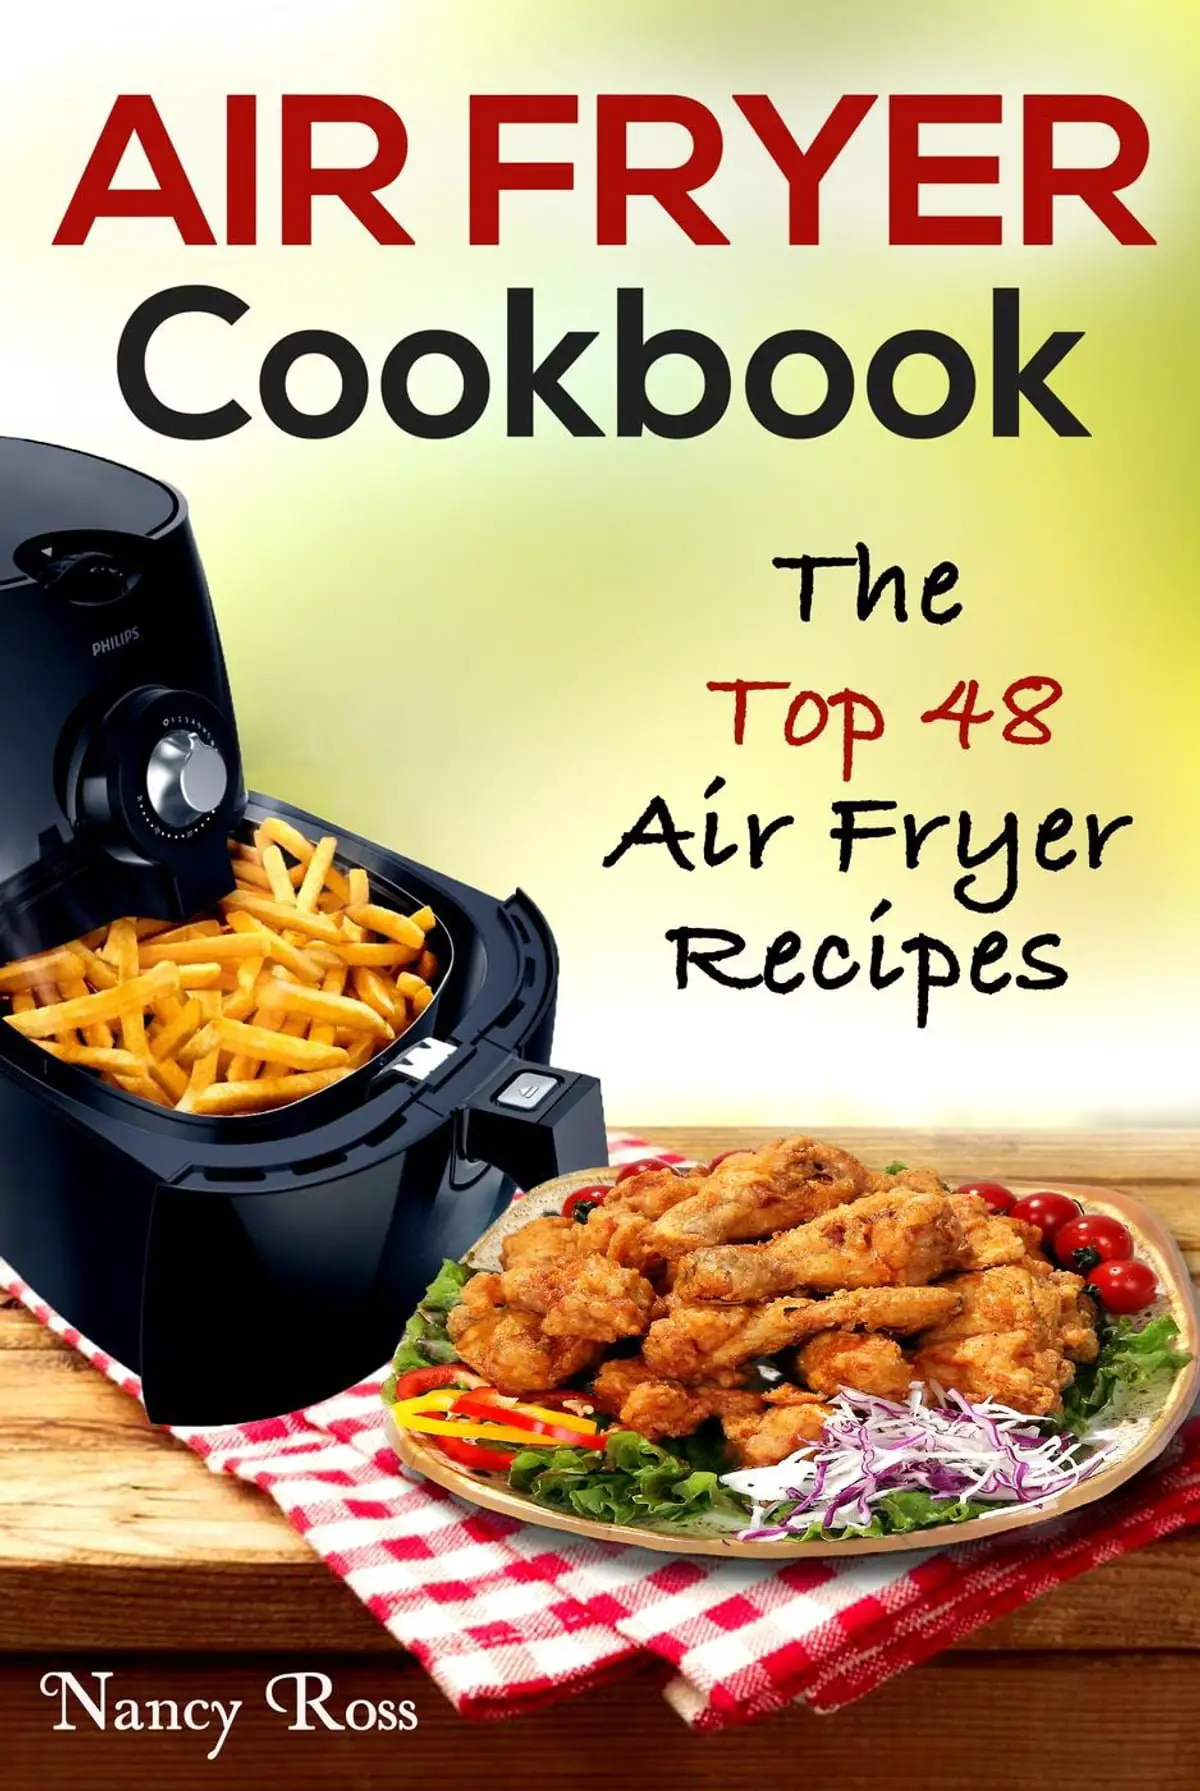 Air Fryer Cookbook: The Top 48 Air Fryer Recipes eBook by Nancy Ross ...